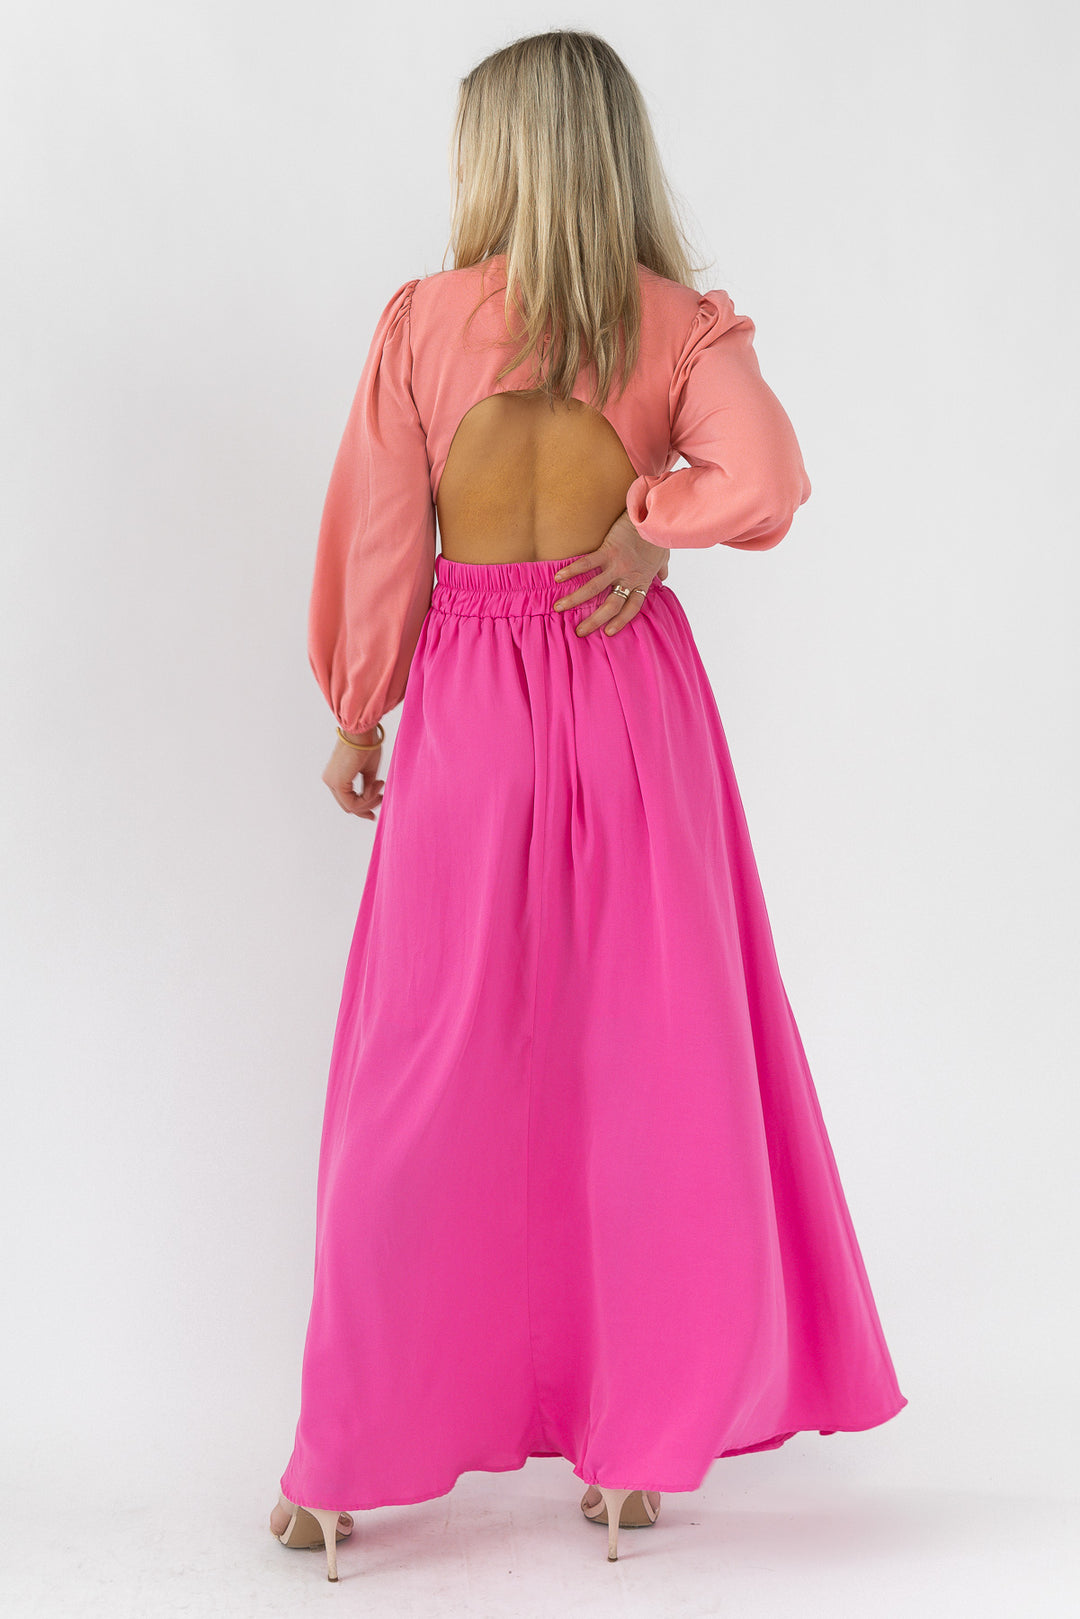 Sienna Peach Pink Maxi Dress - Final Sale